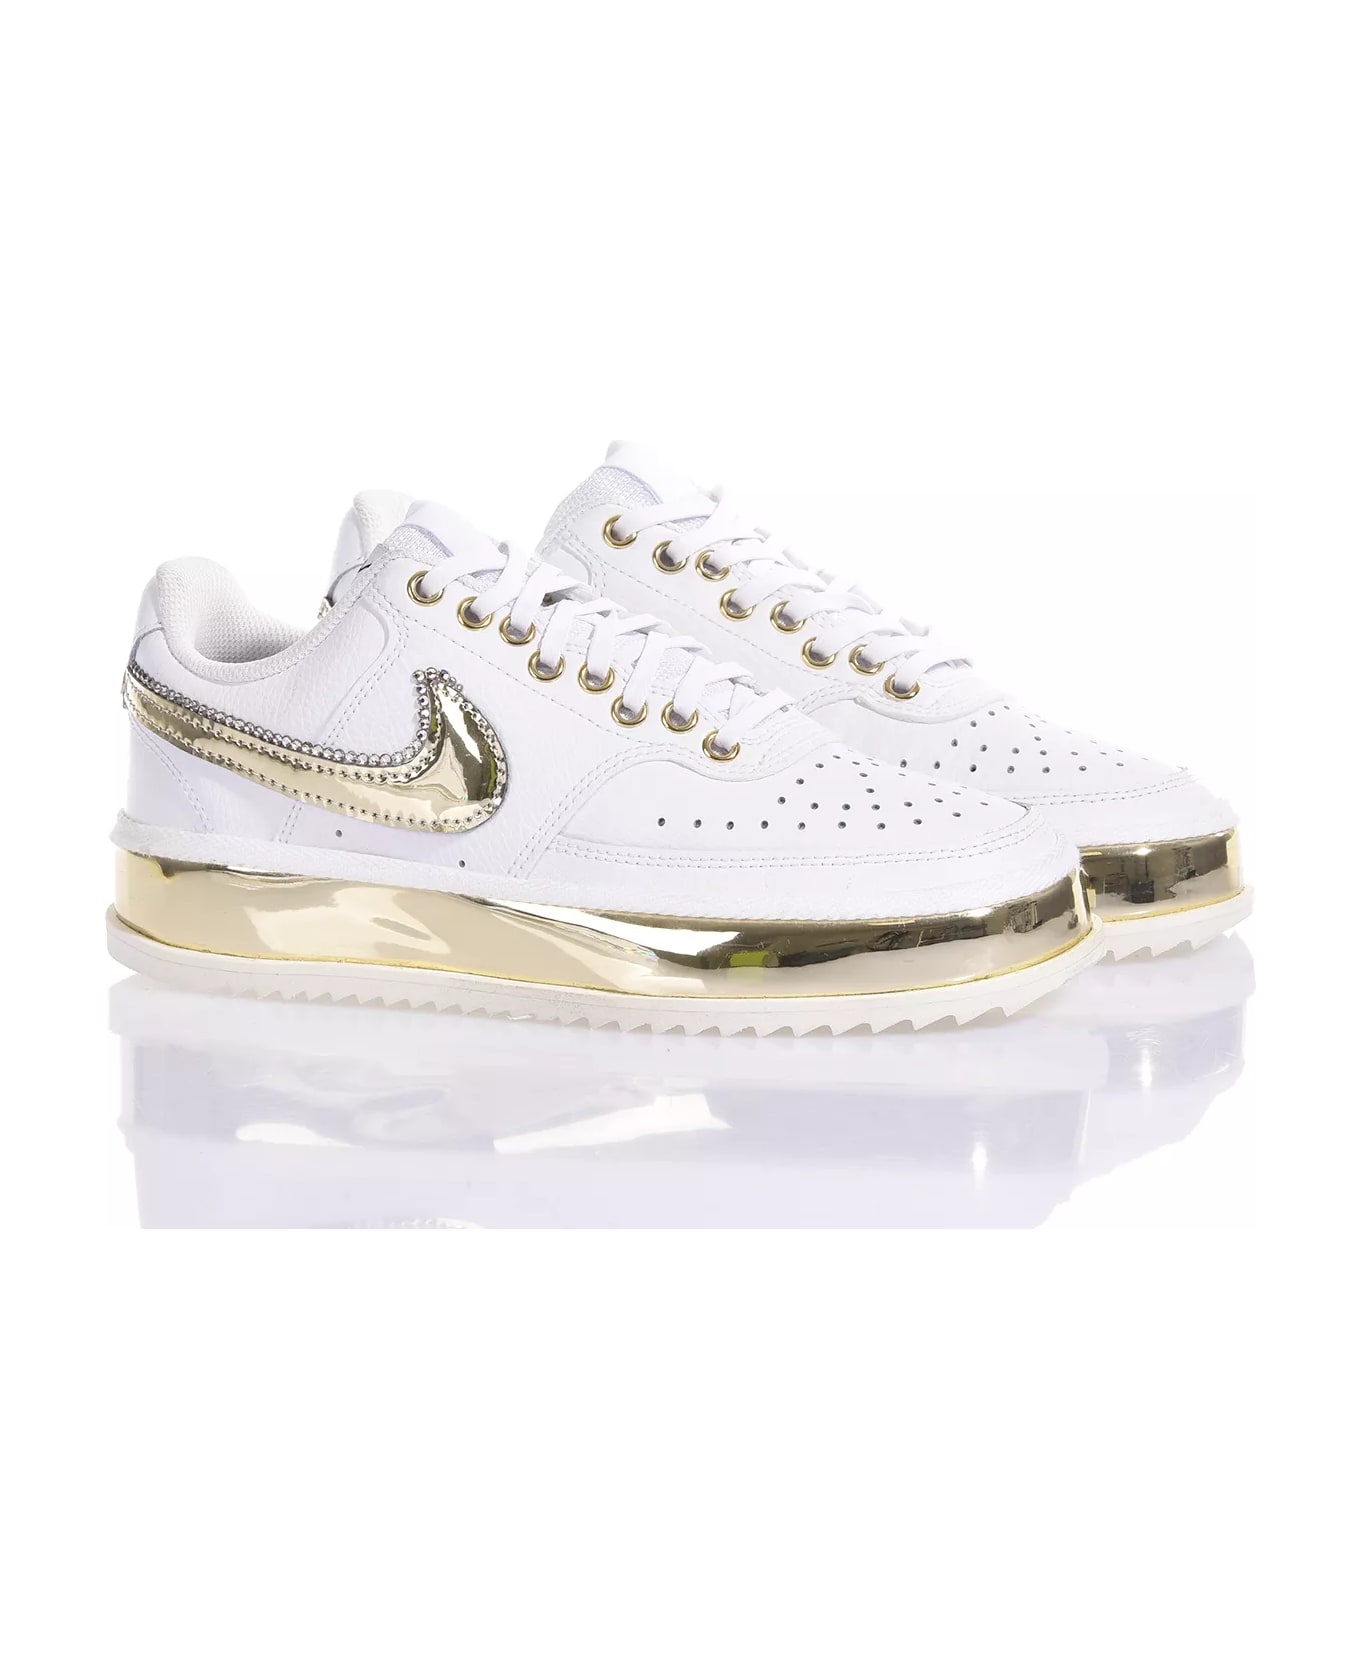 Mimanera Nike Blend Gold Custom